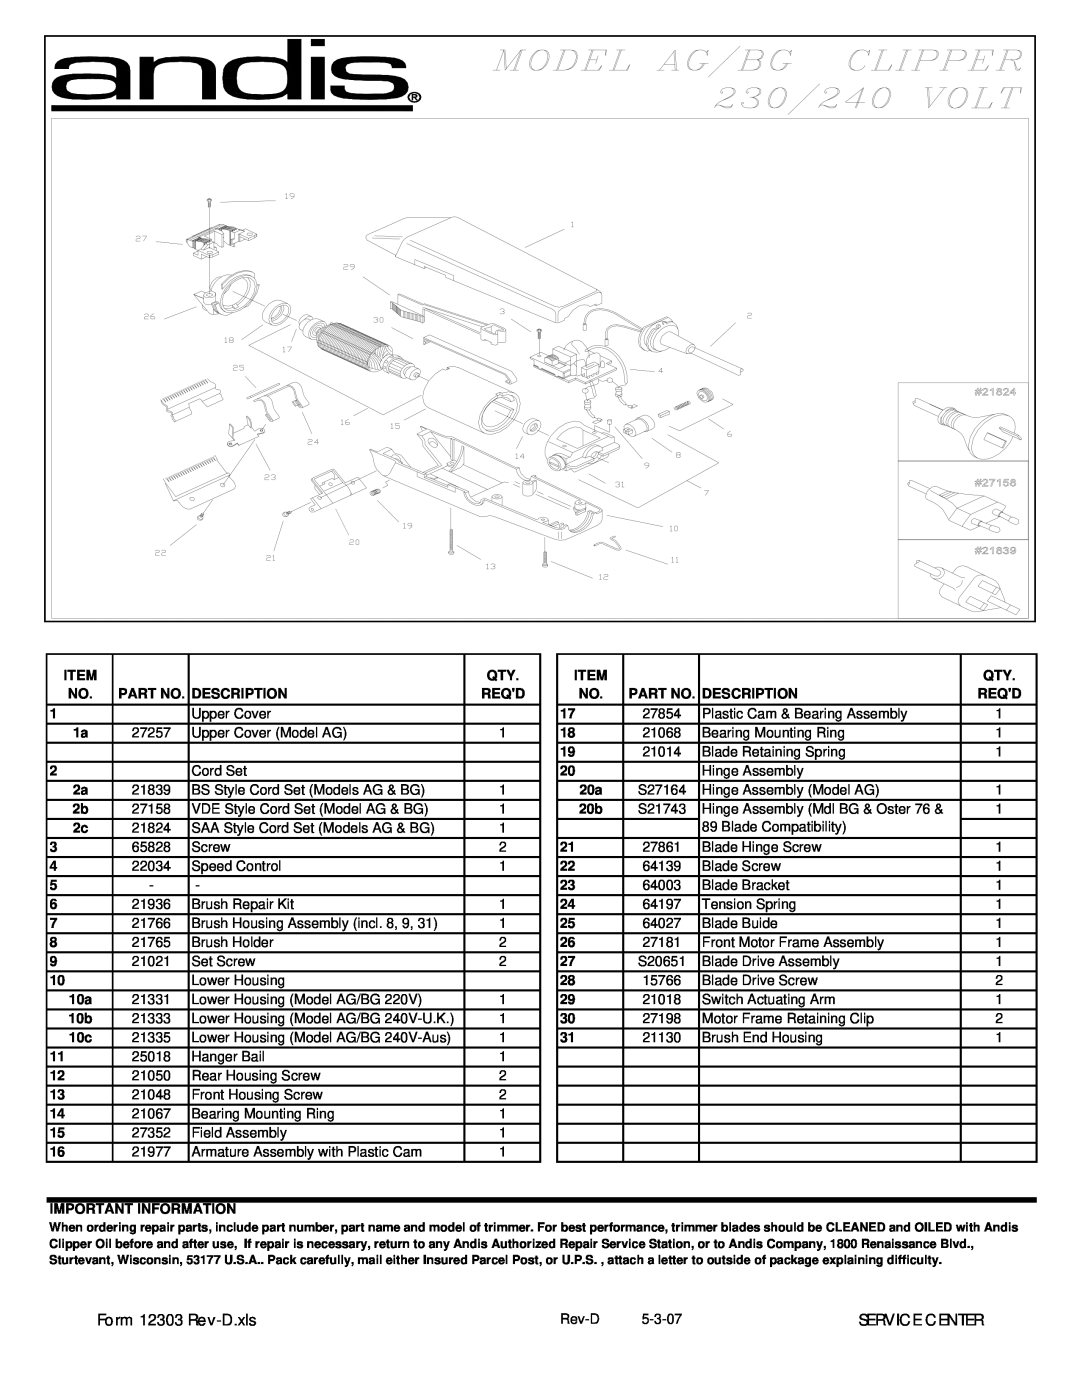 Andis Company BG manual Form 12303 Rev-D.xls, Service Center 